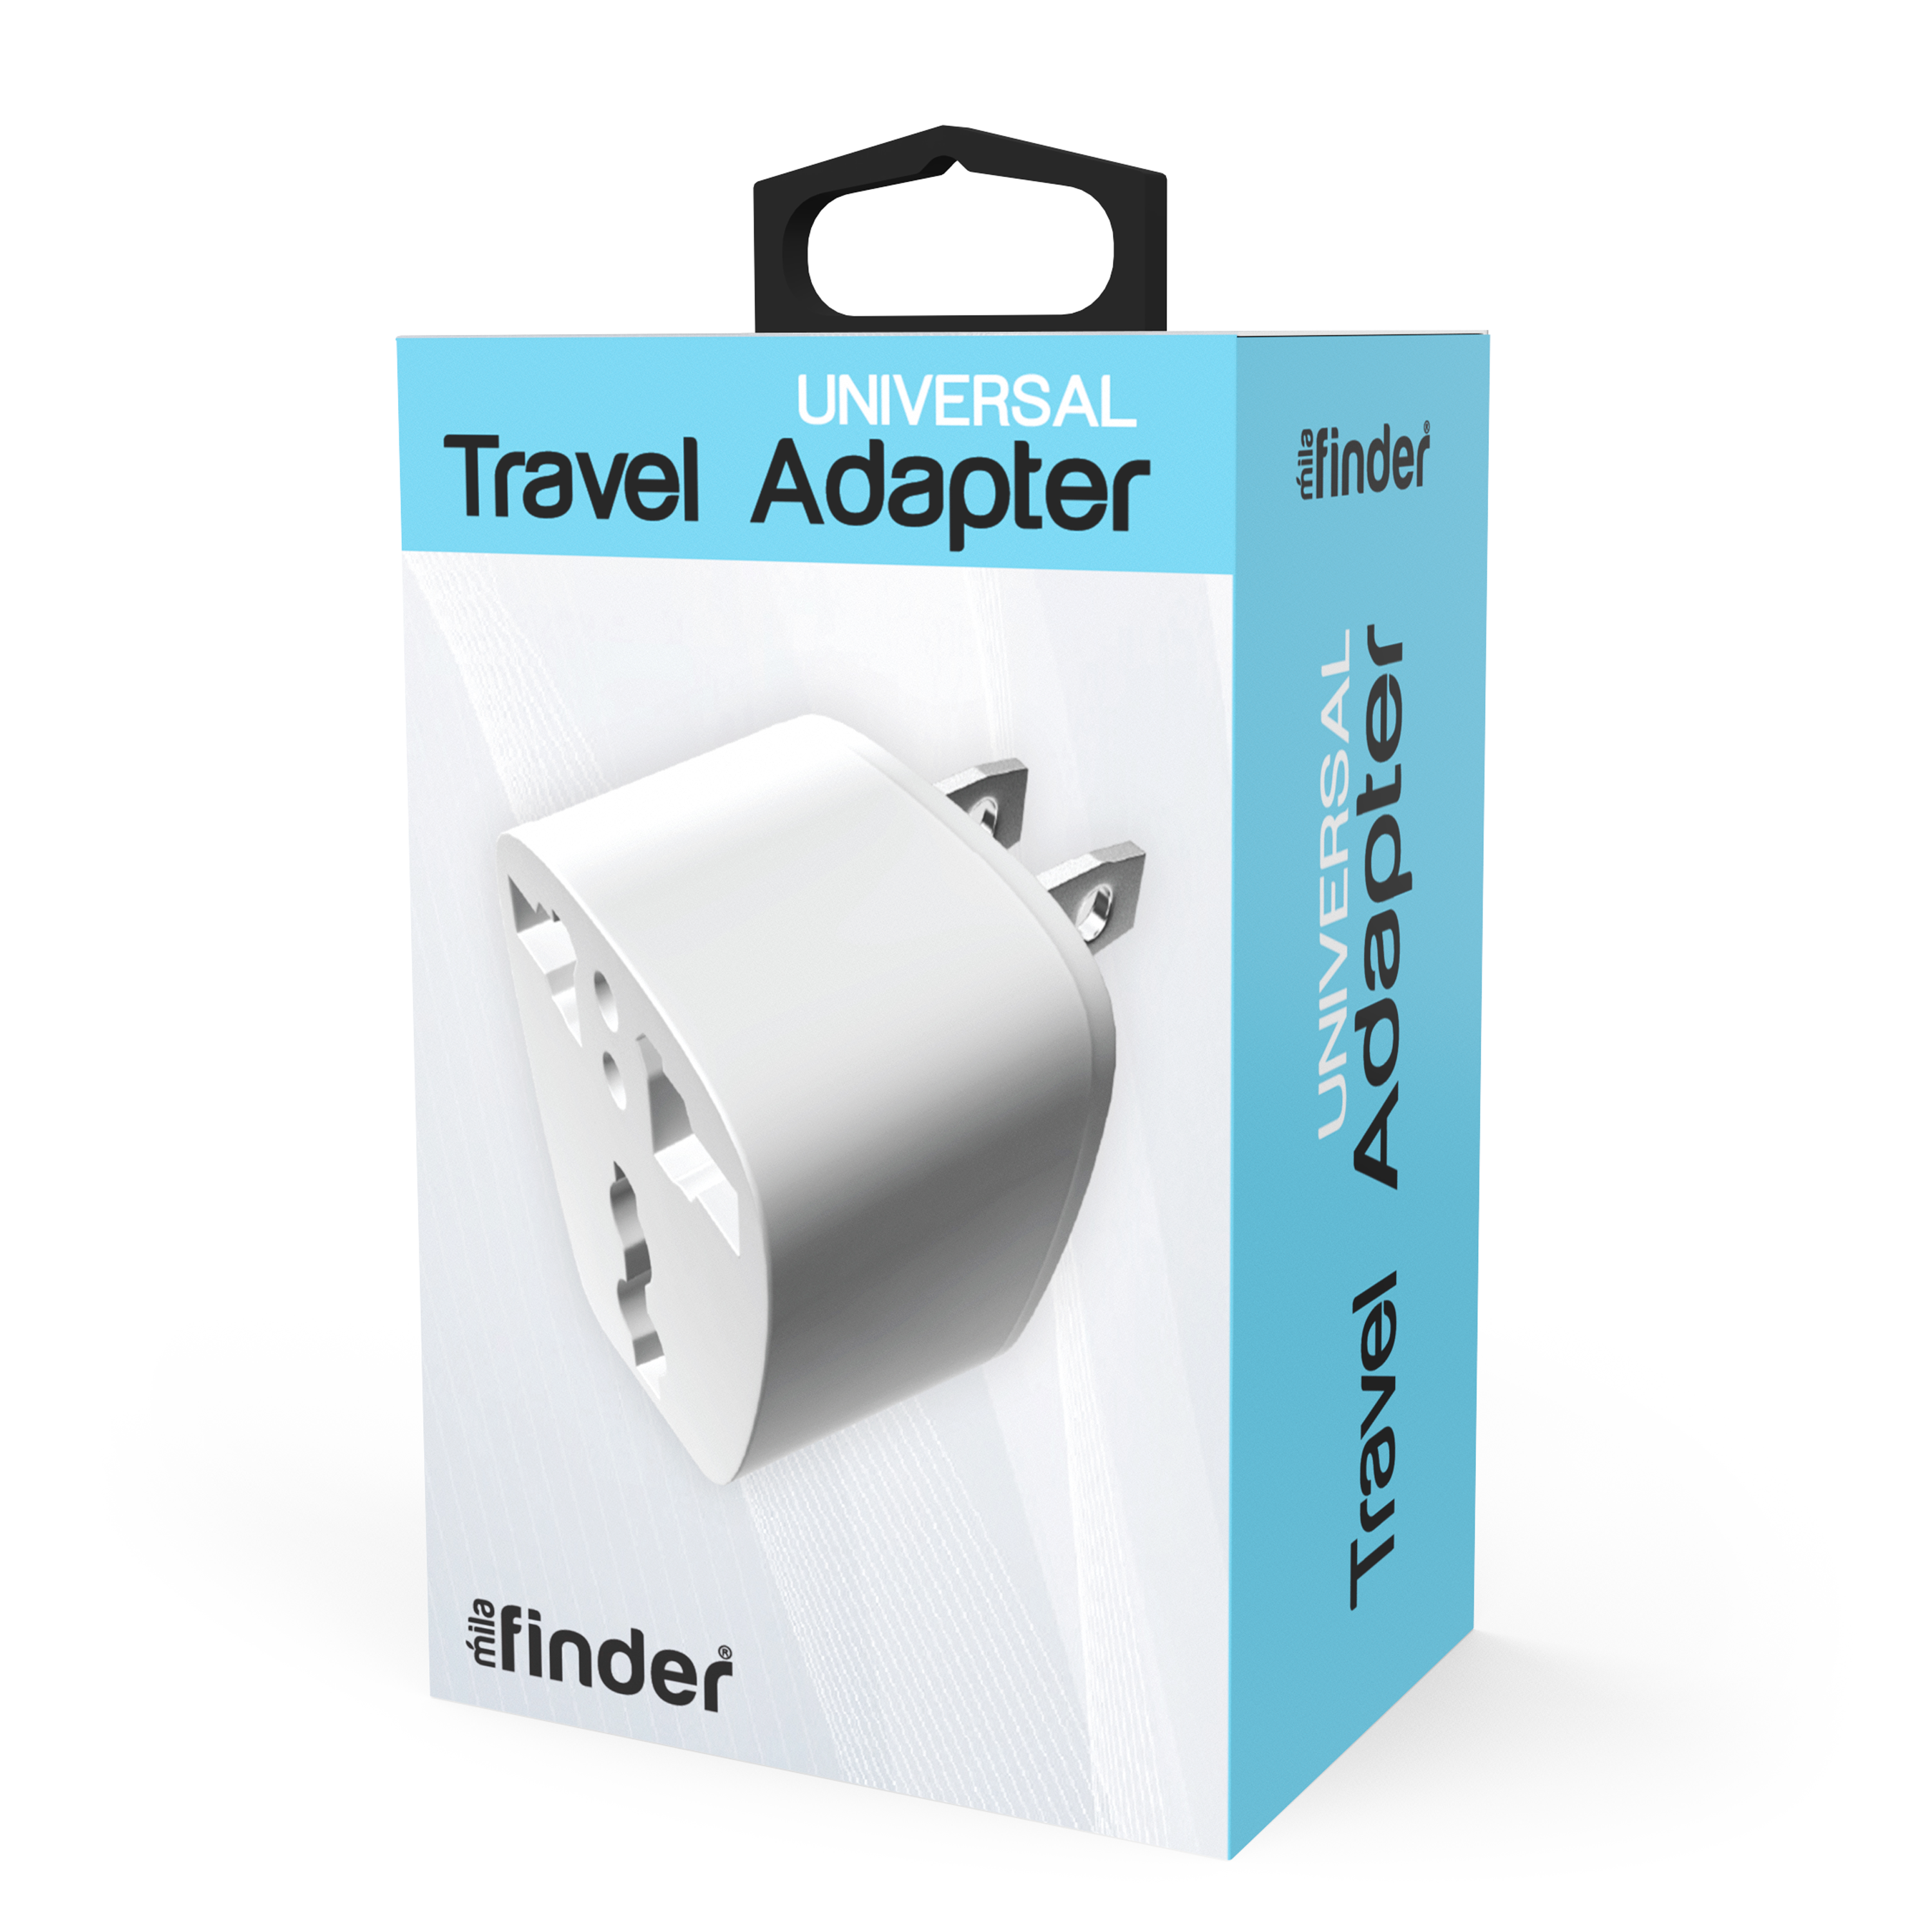 Universal USB Travel Adapter Plug